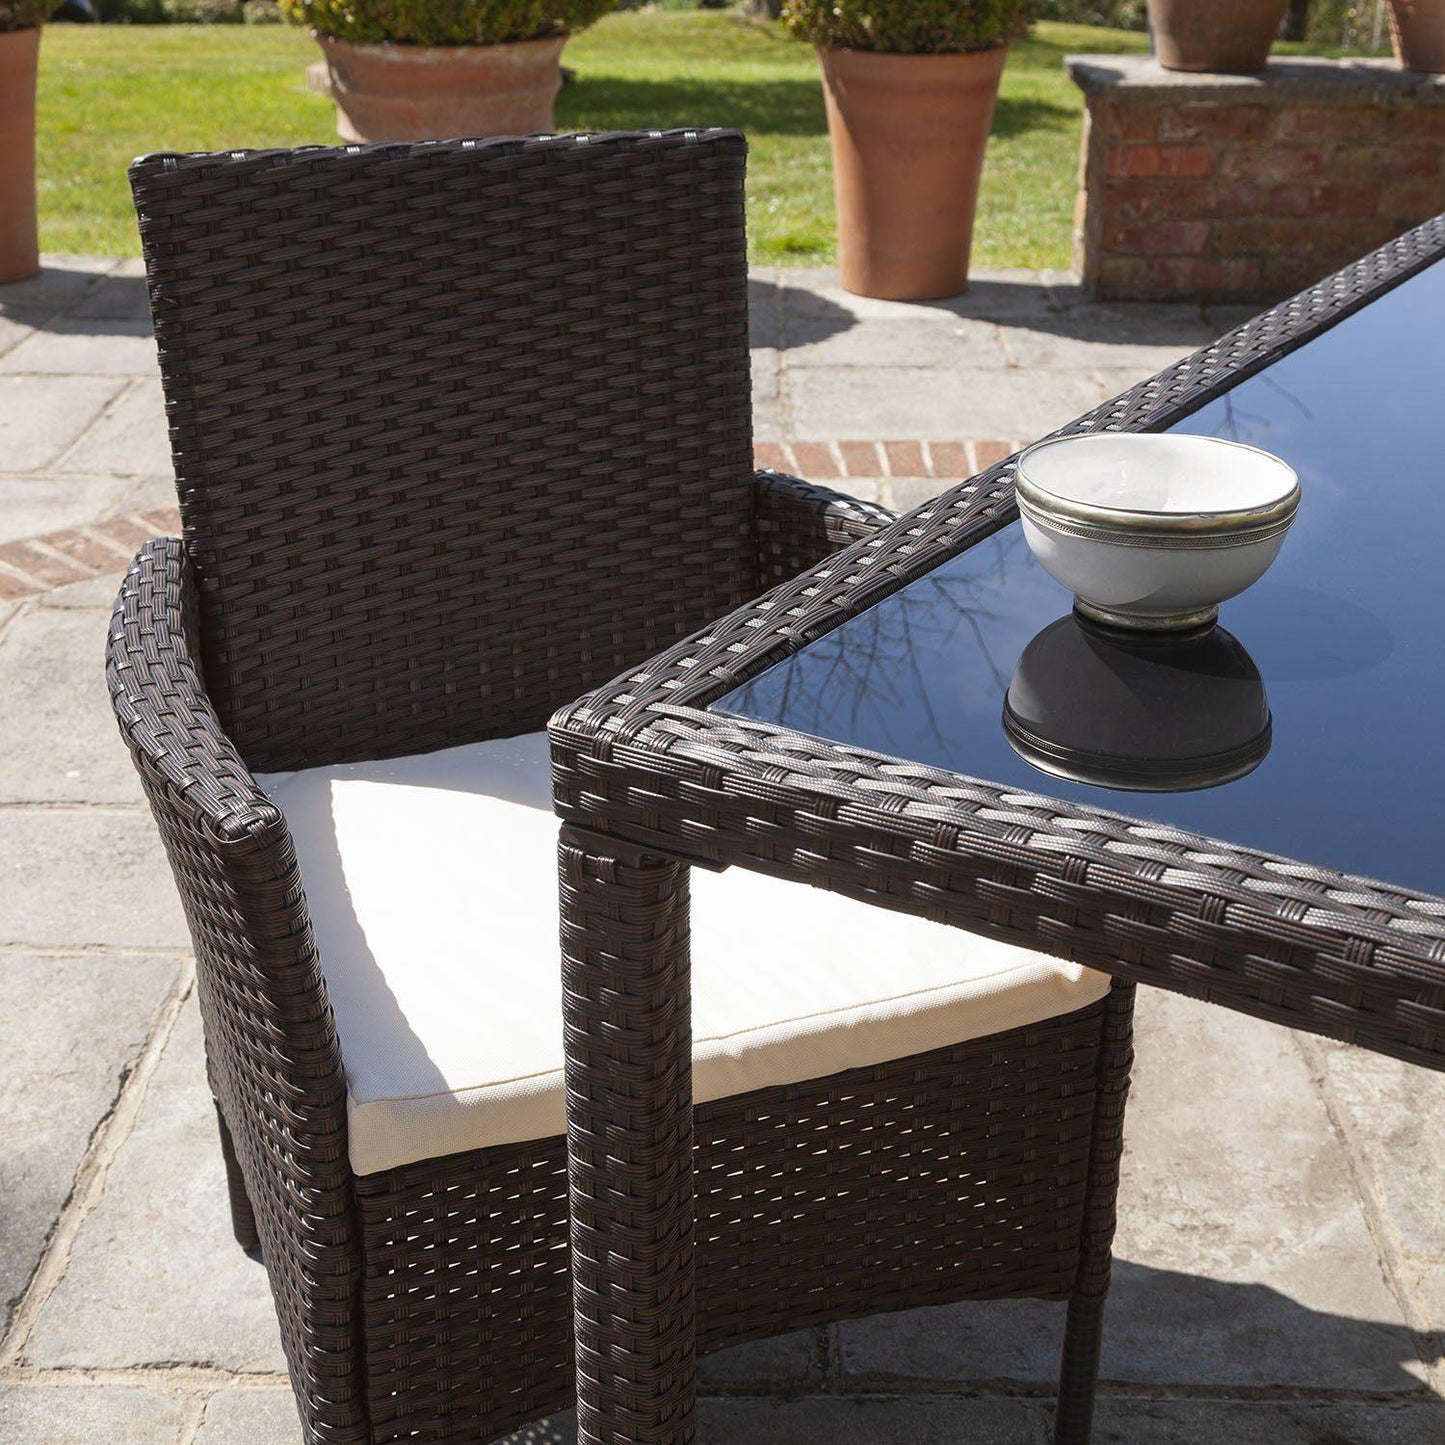 Marston 6 Seater Rattan Dining Set with Cream Parasol - Rattan Garden Furniture - Brown